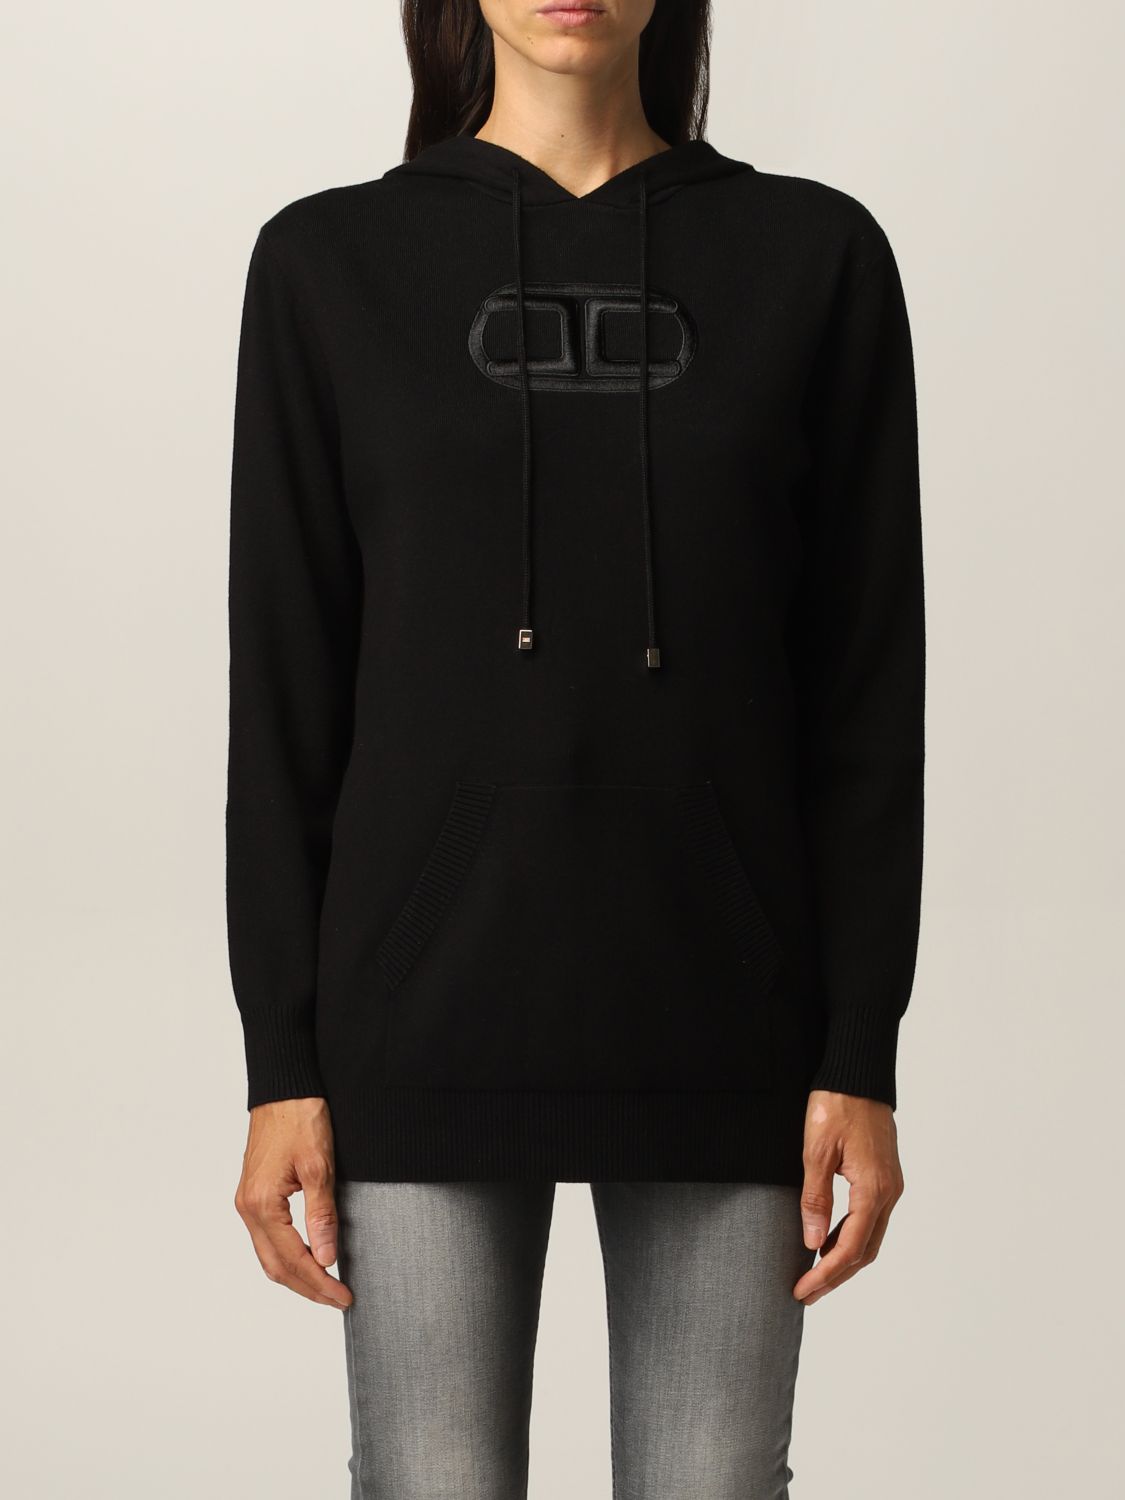 ELISABETTA FRANCHI: knitted sweatshirt with logo | Sweatshirt ...